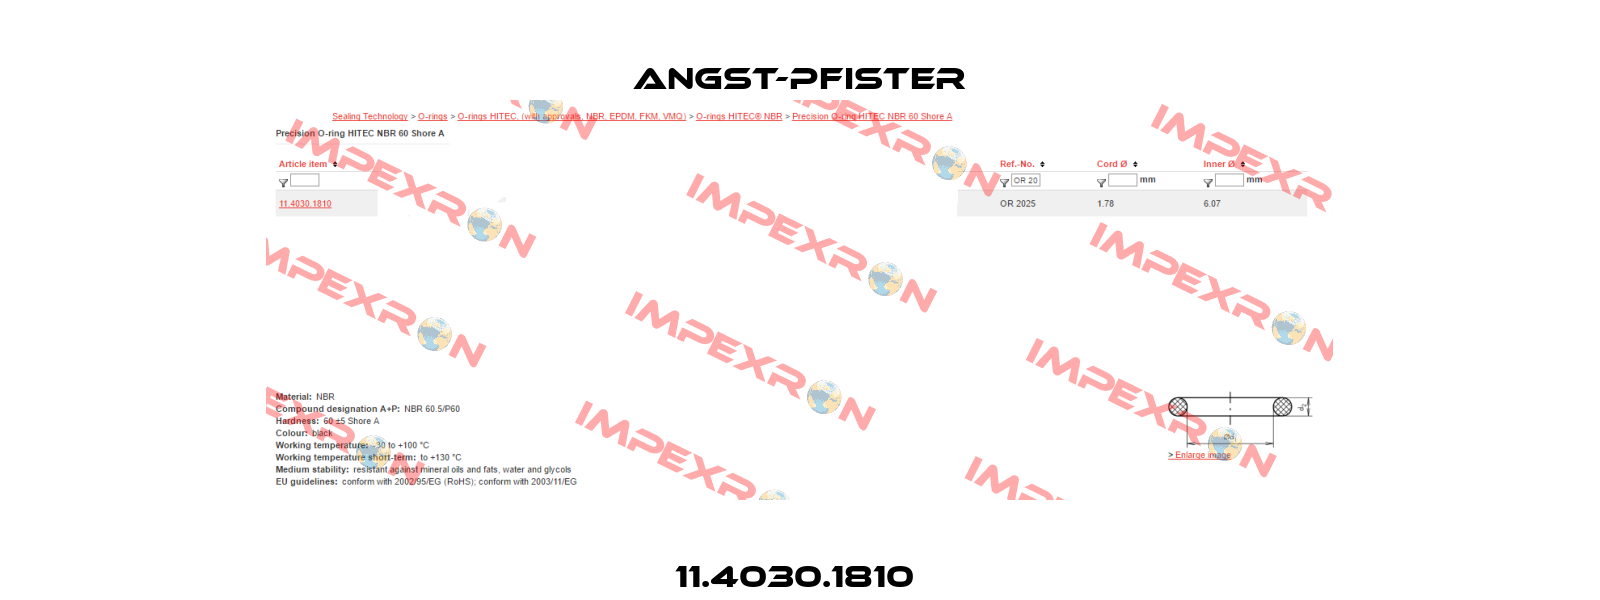 11.4030.1810  Angst-Pfister